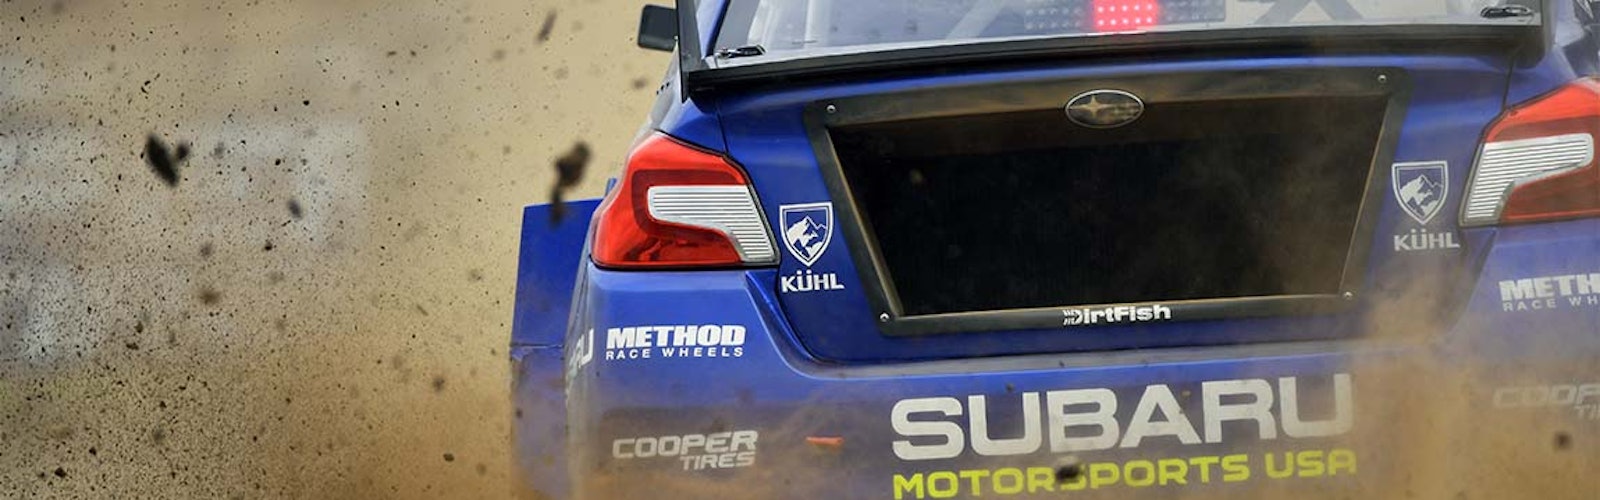 Subaru-Motorsports-COTA-2019